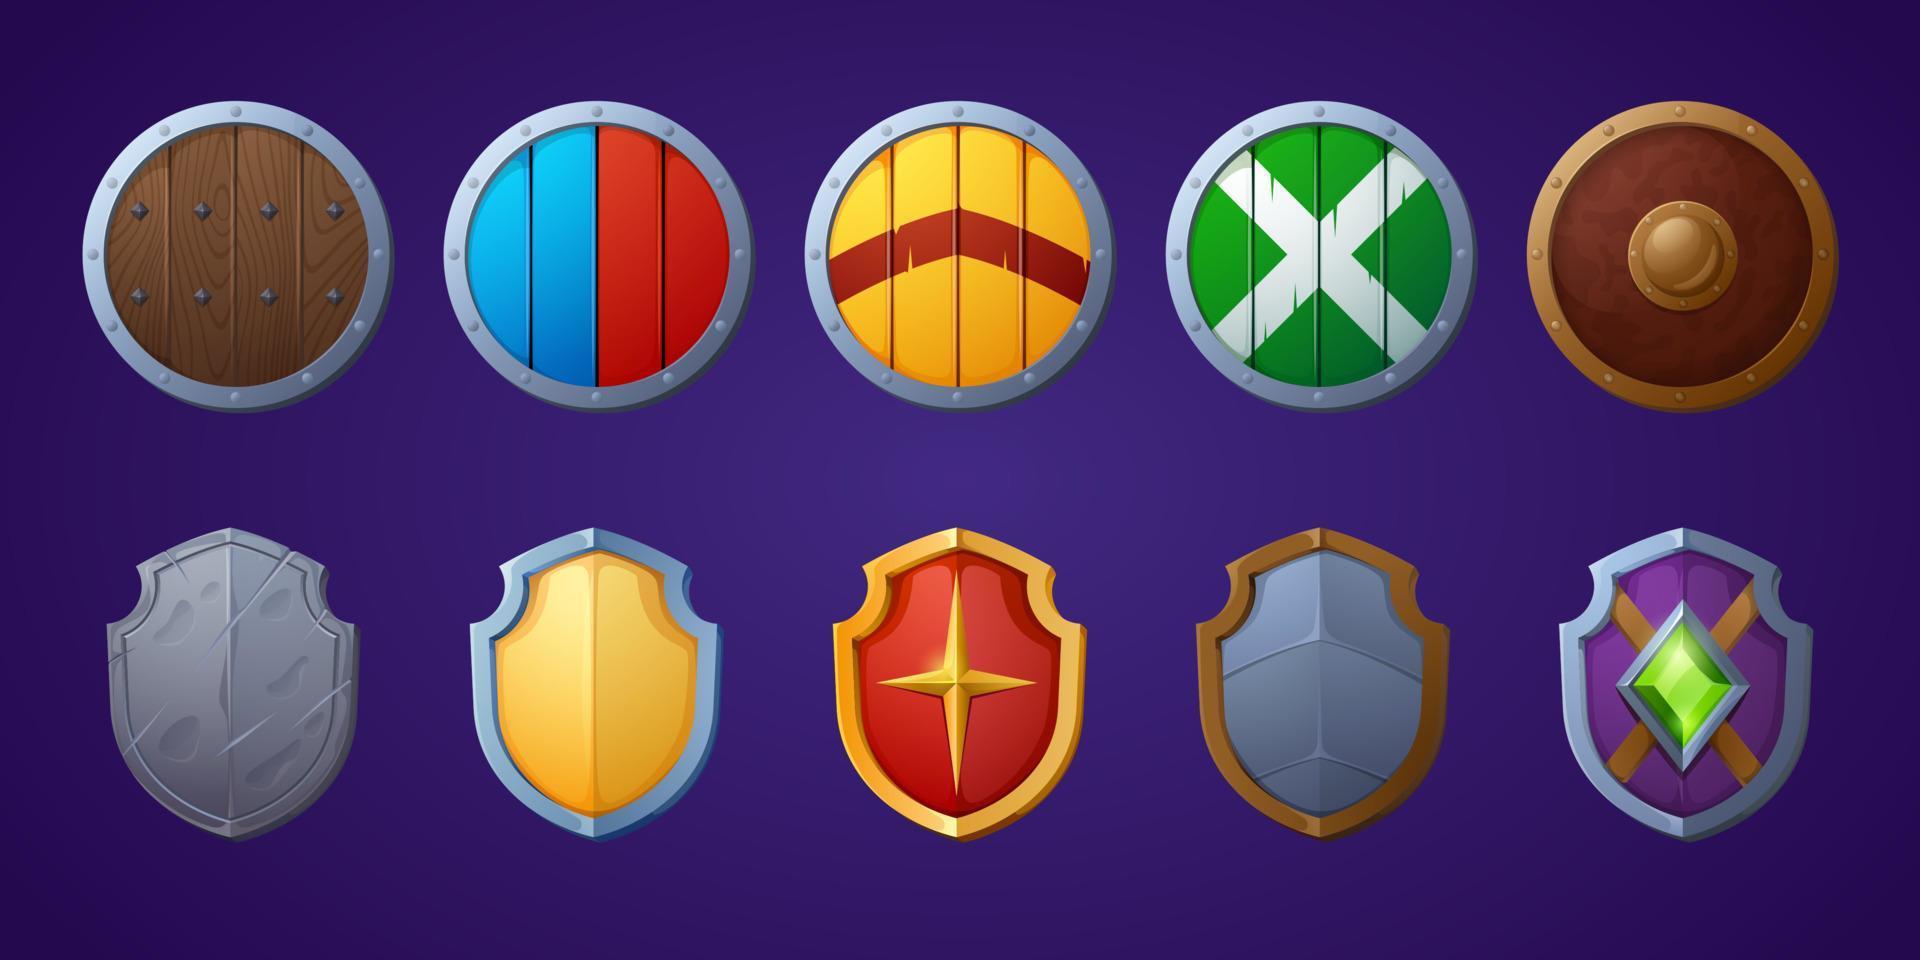 Set of game shields cartoon fantasy medieval armor vector